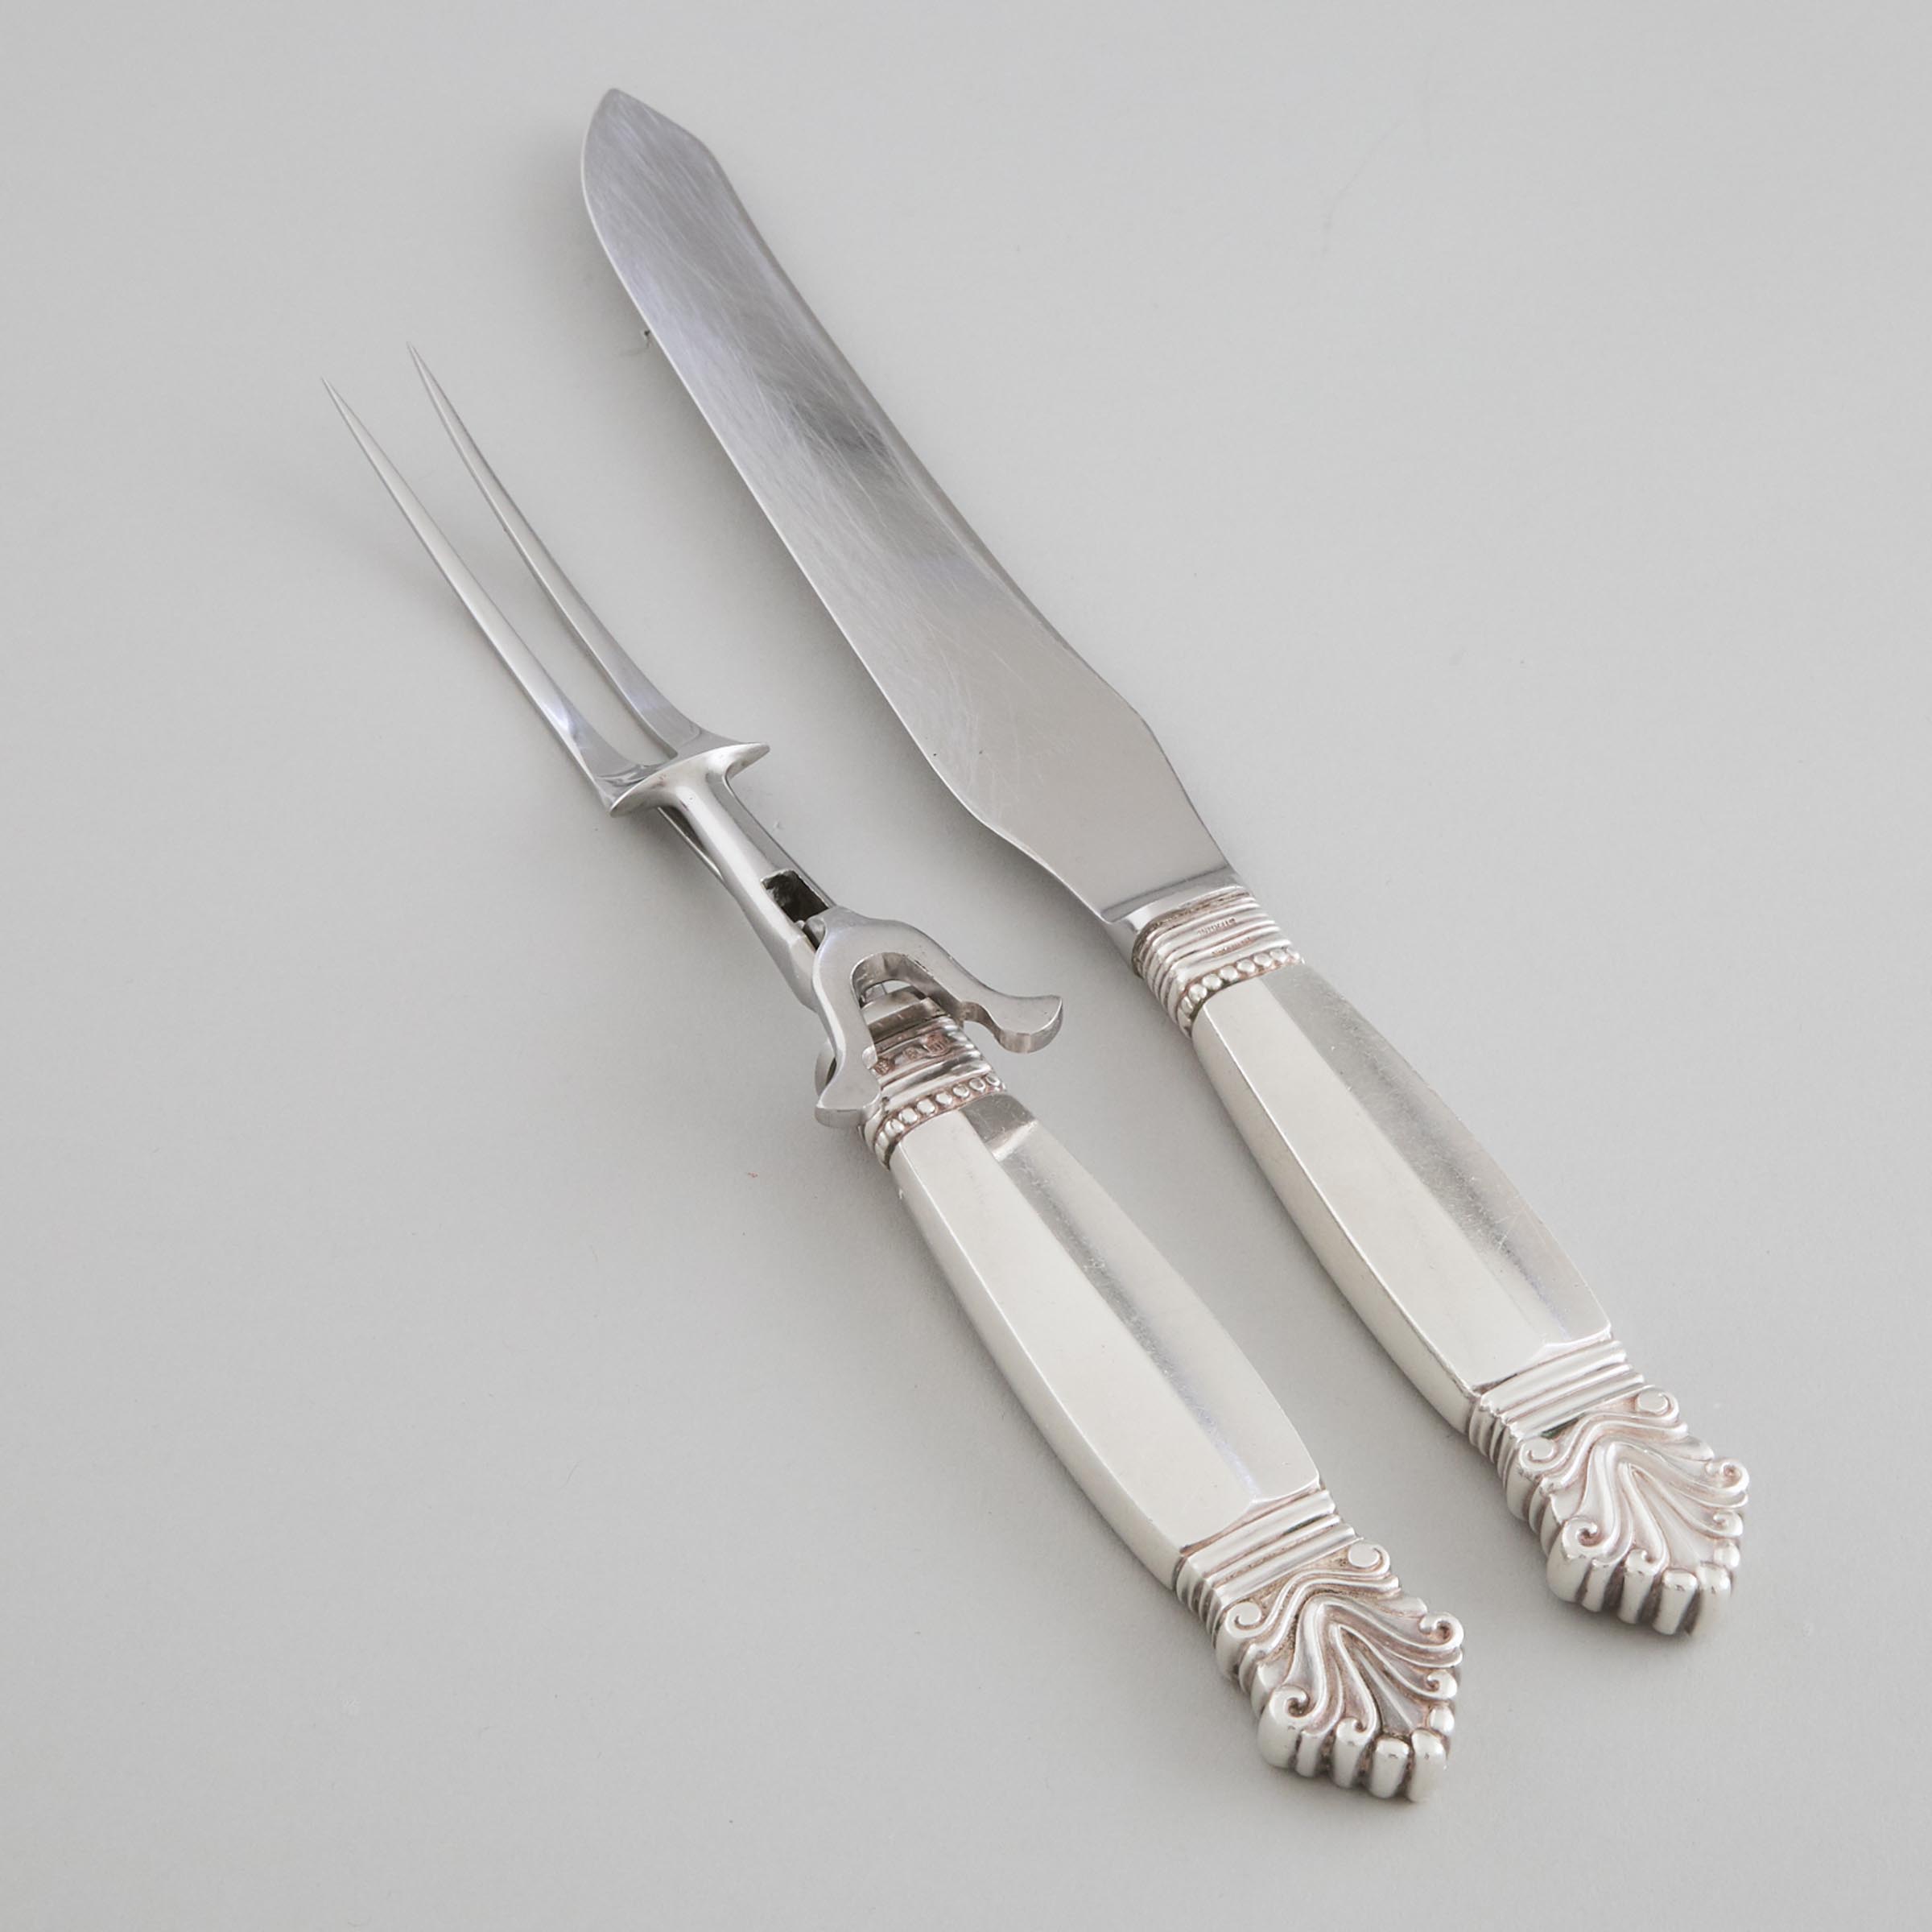 Danish Silver ‘Acanthus’ Pattern Carving Knife and Fork, Johan Rohde for Georg Jensen, Copenhagen, 1935